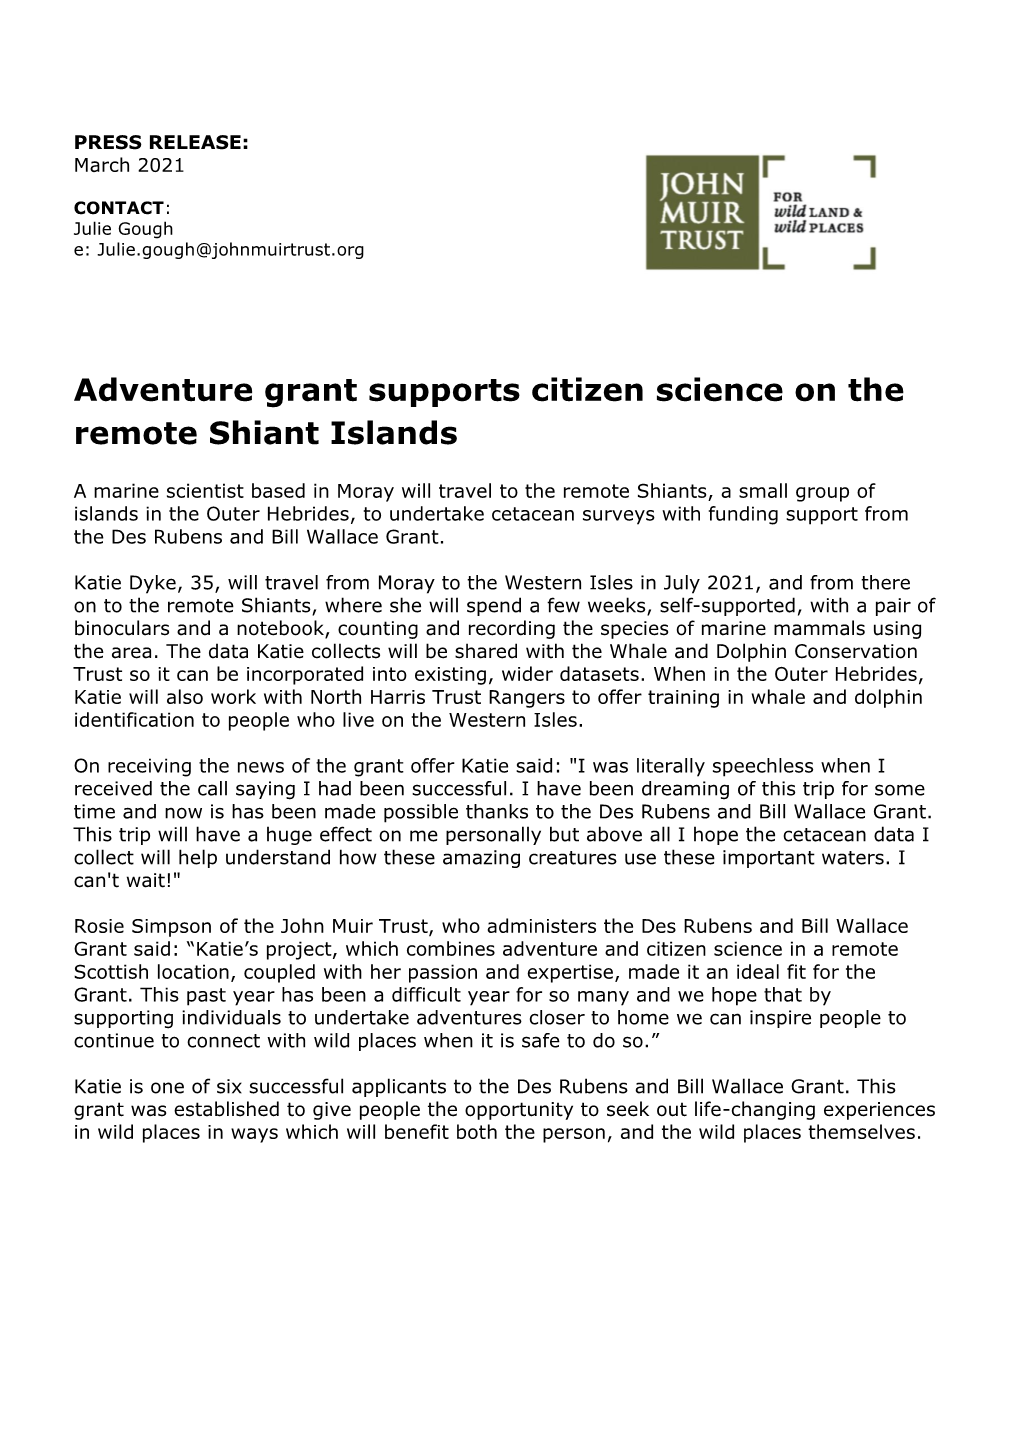 Adventure Grant Supports Citizen Science on the Remote Shiant Islands